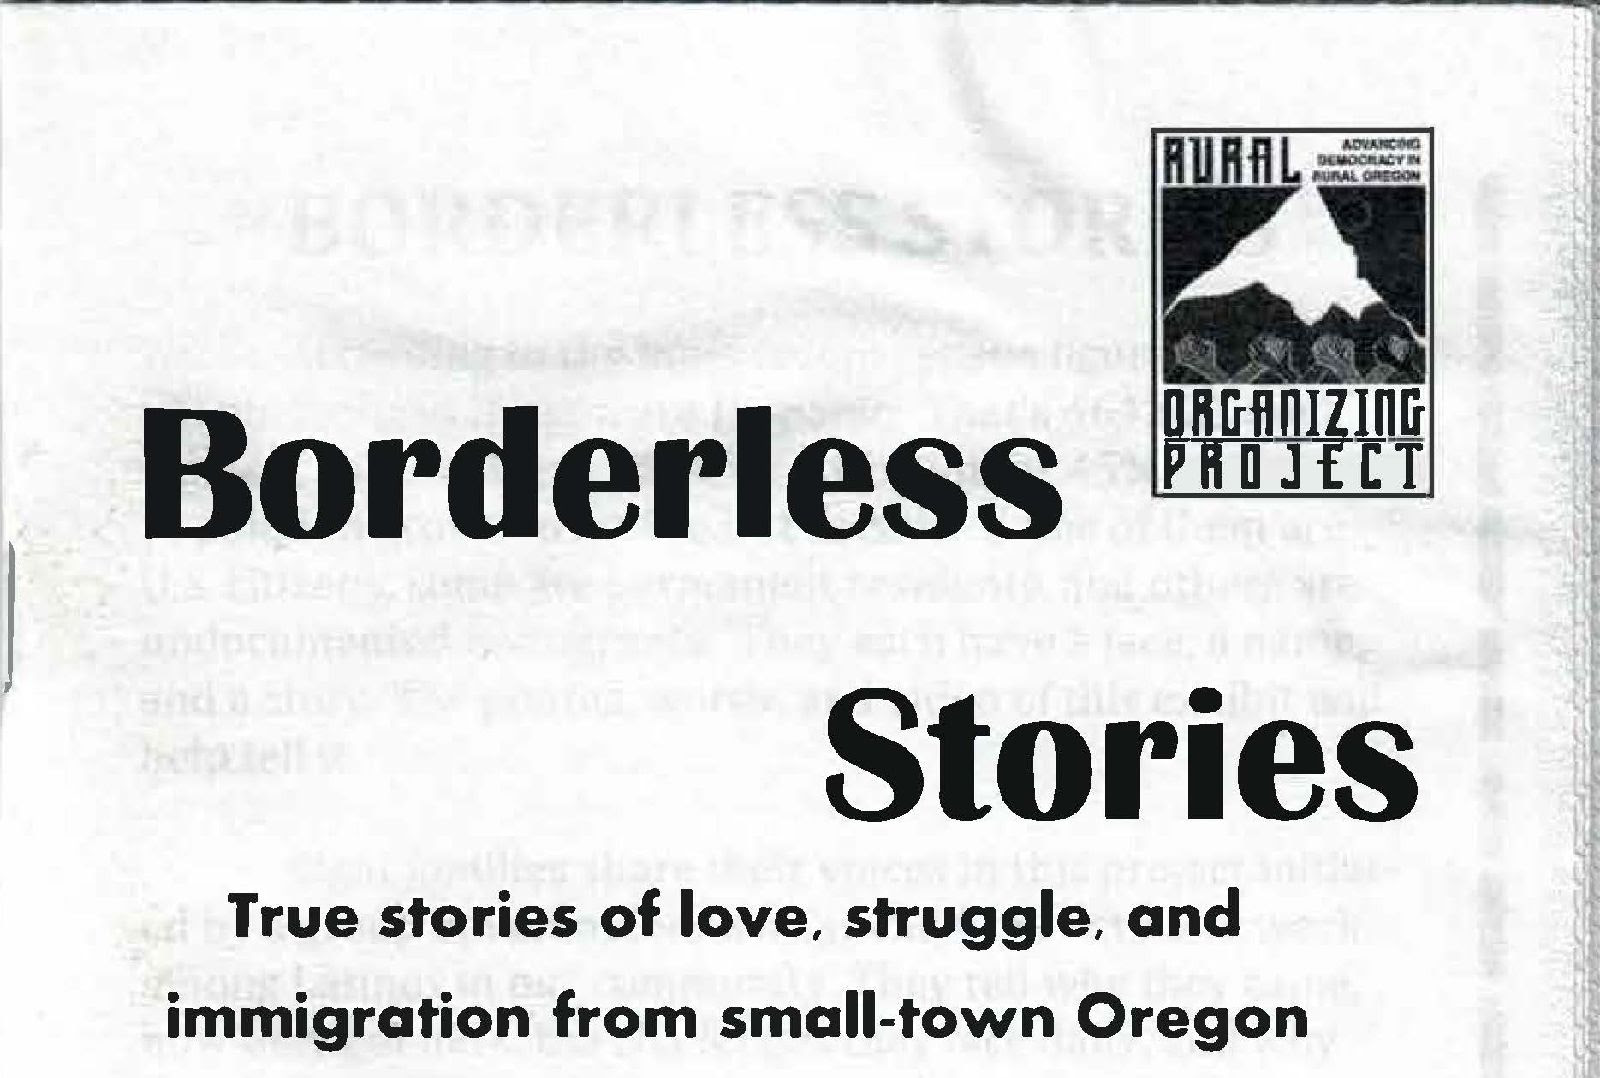 Обложка журнала выставки Borderless Stories, 2011 г.